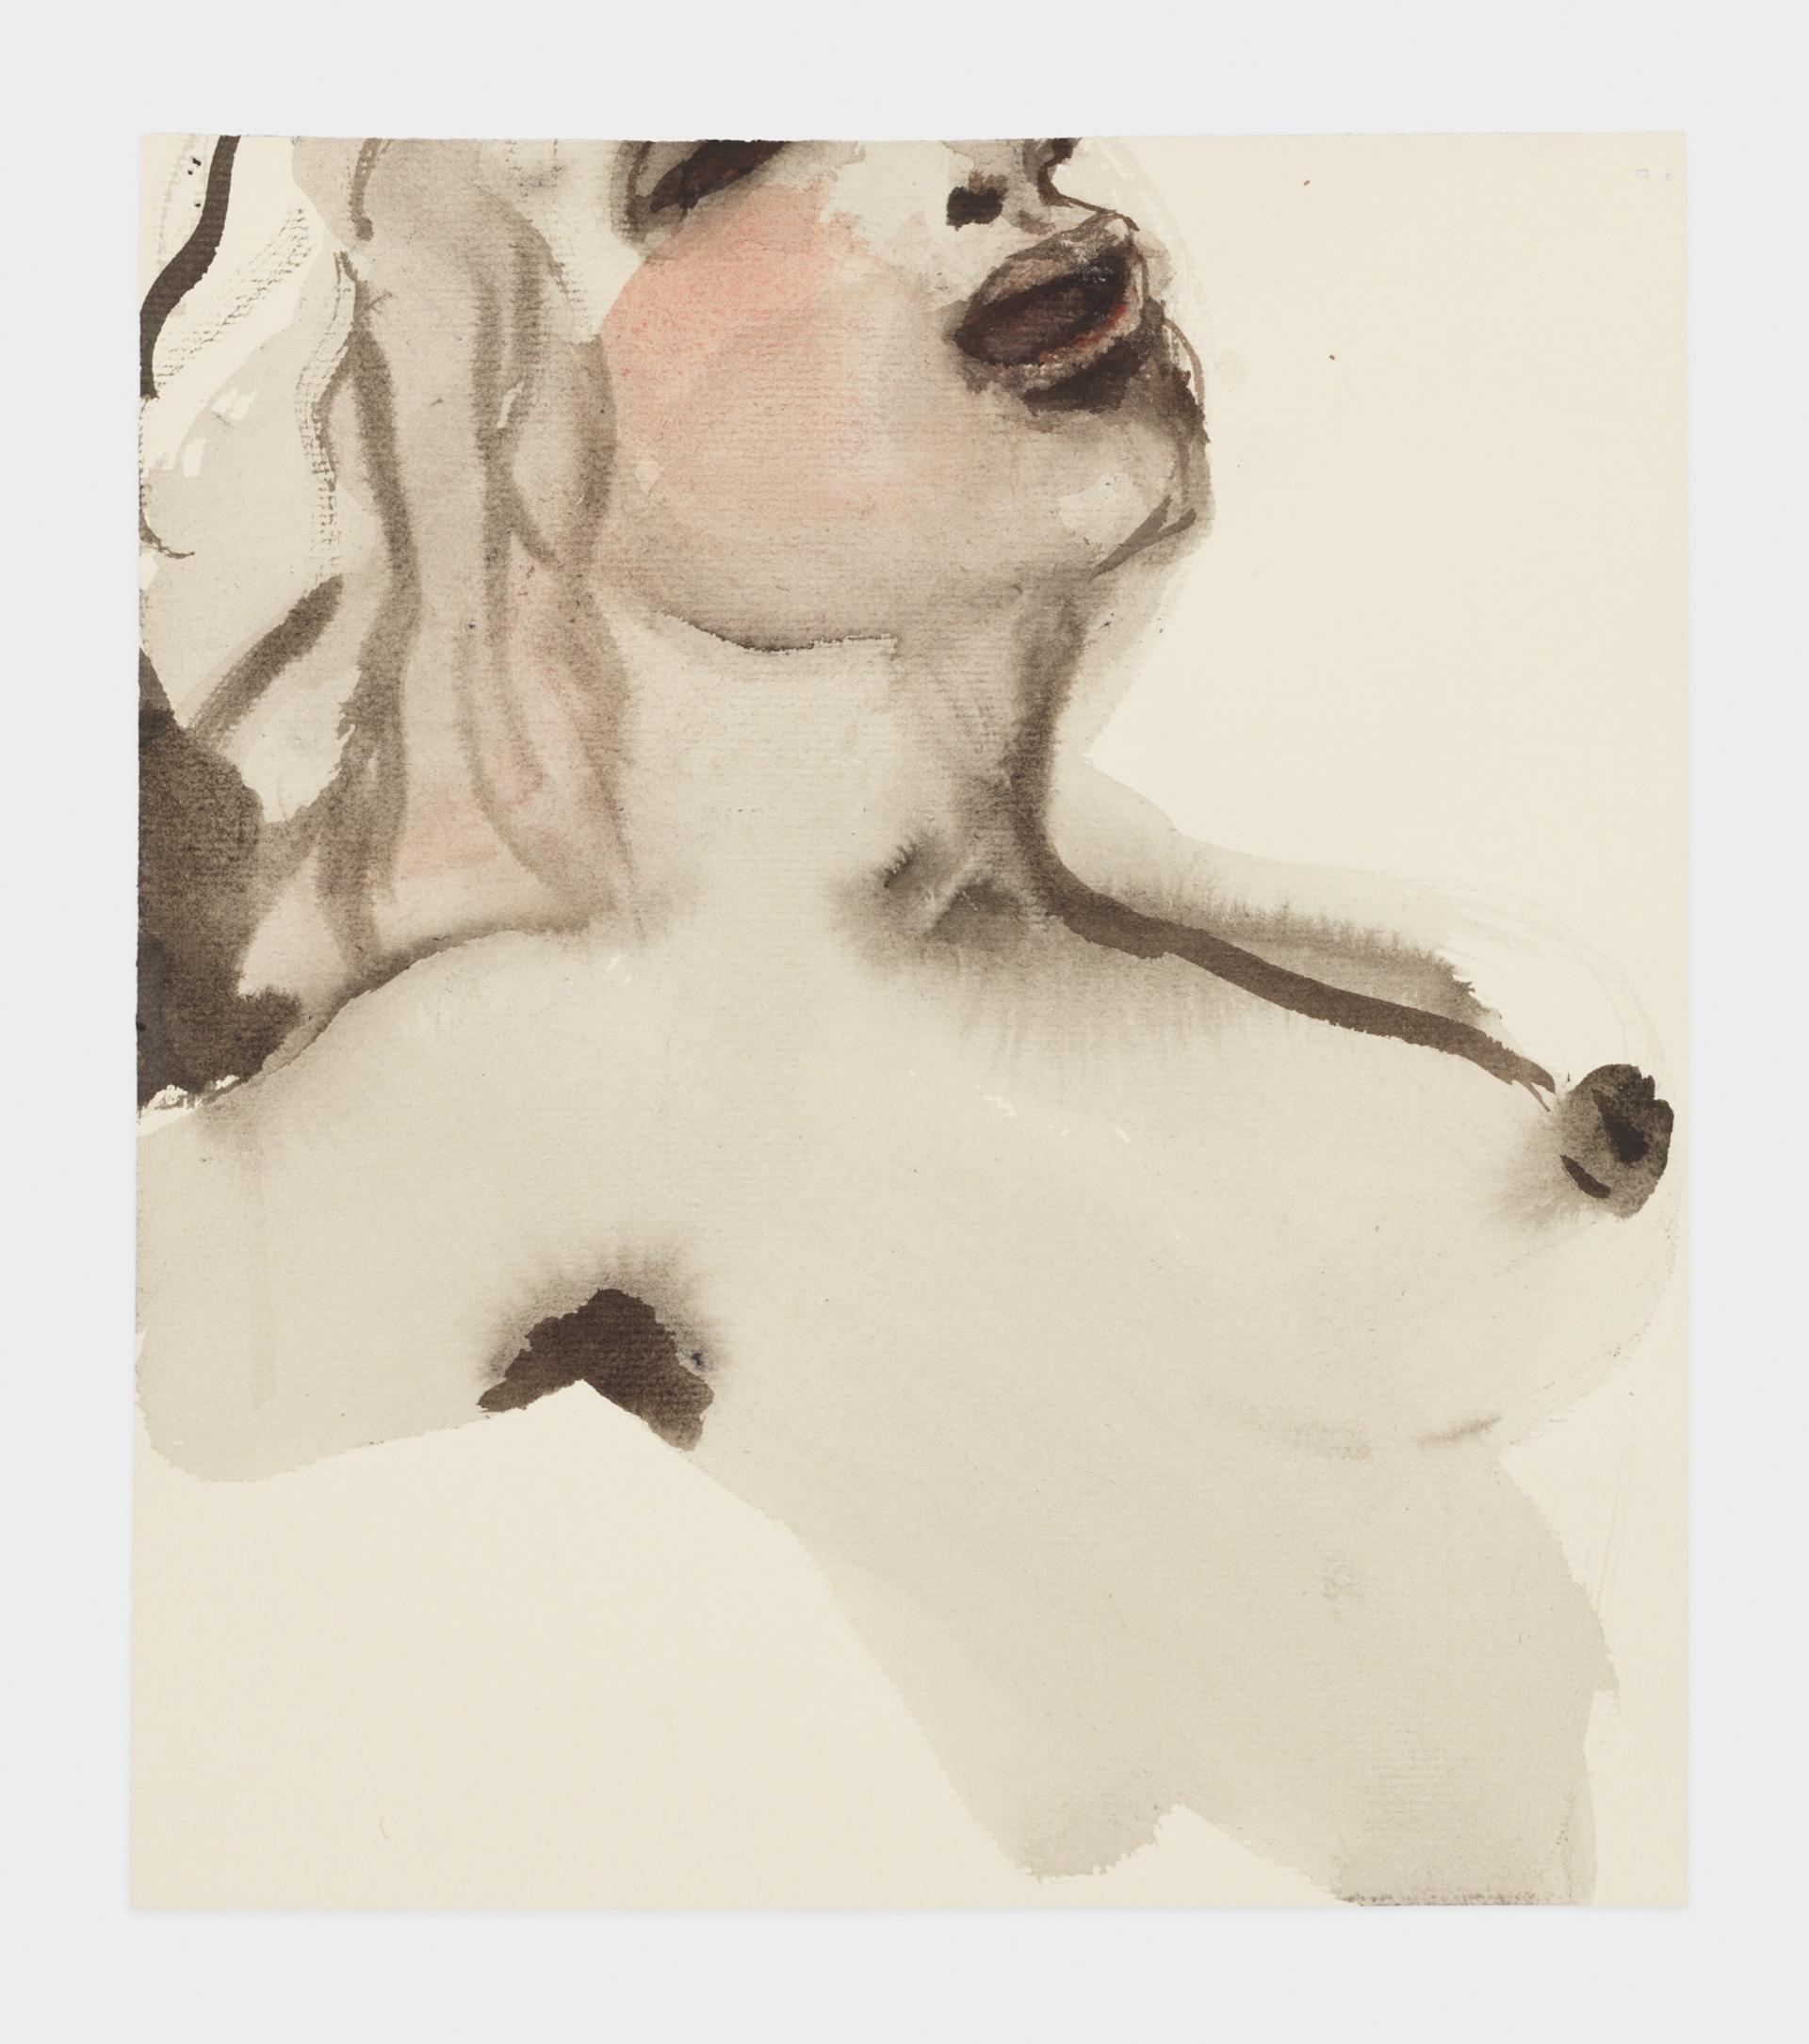 Marlene Dumas 'Venus in bliss,' 2015-2016 Ink wash and metallic acrylic on paper Image courtesy of David Zwirner